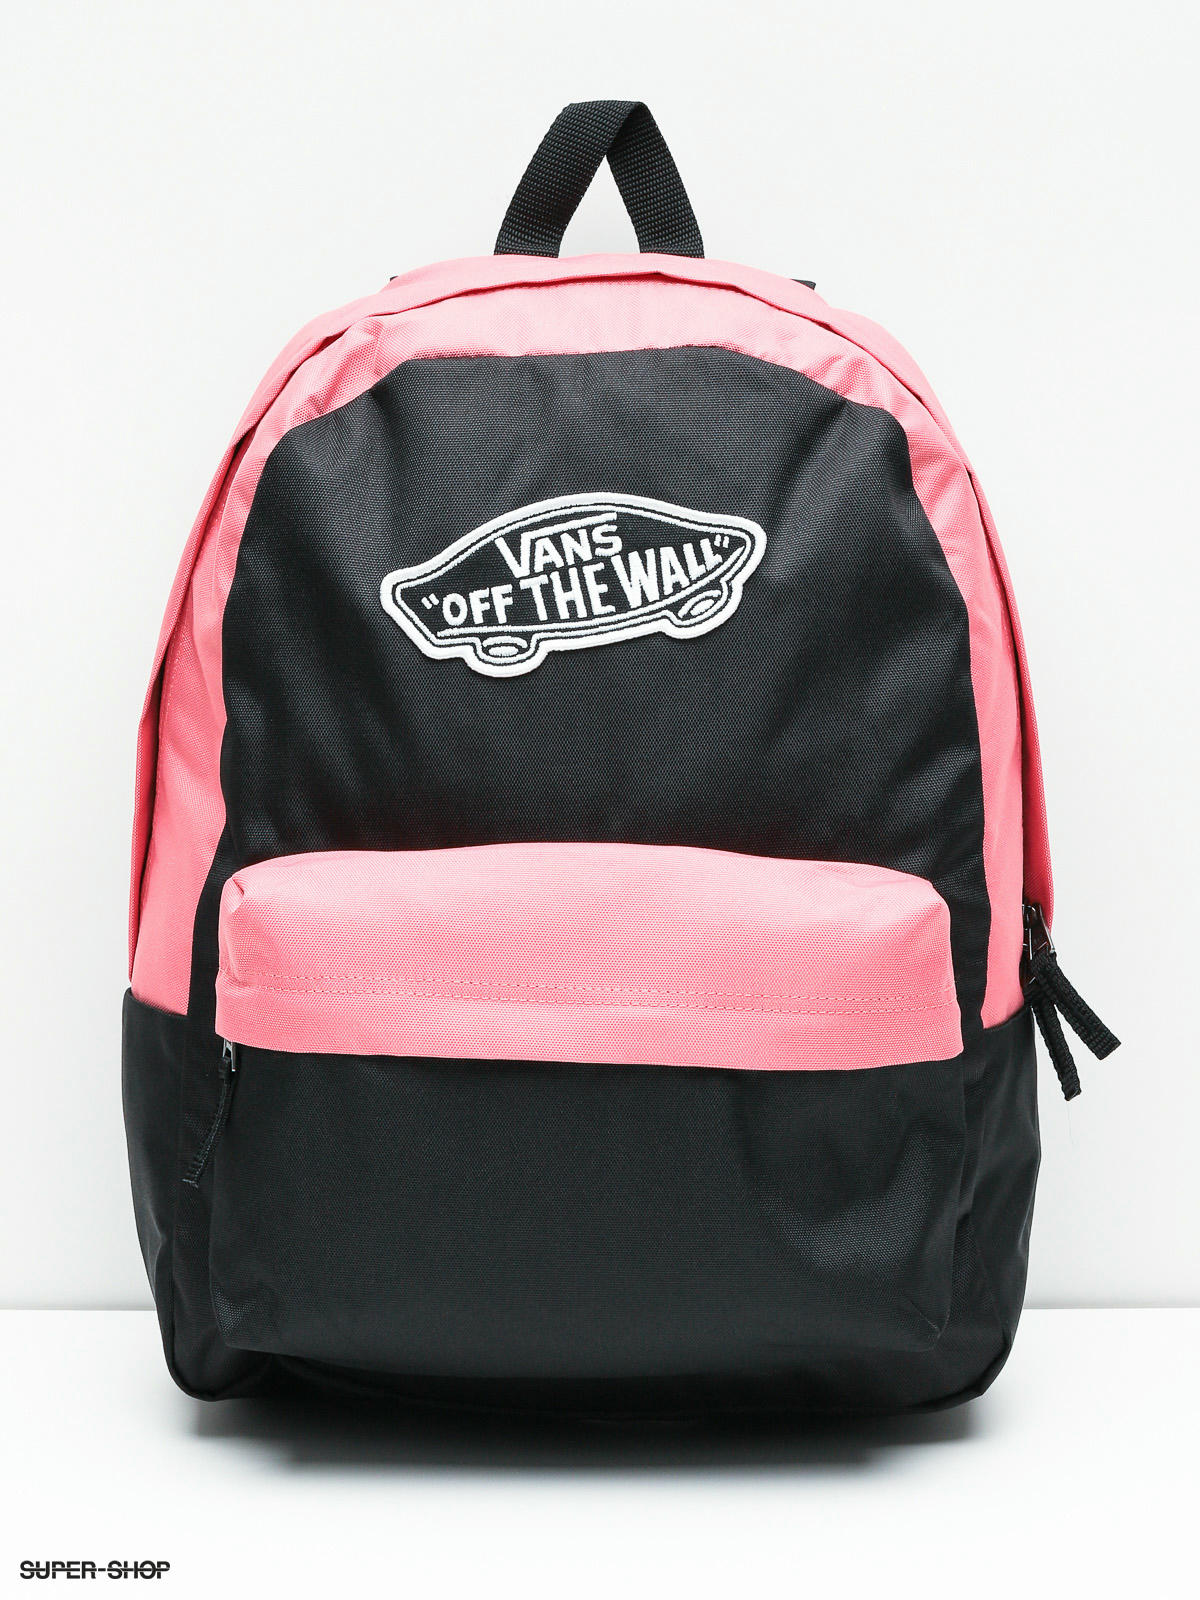 grey and pink vans backpack